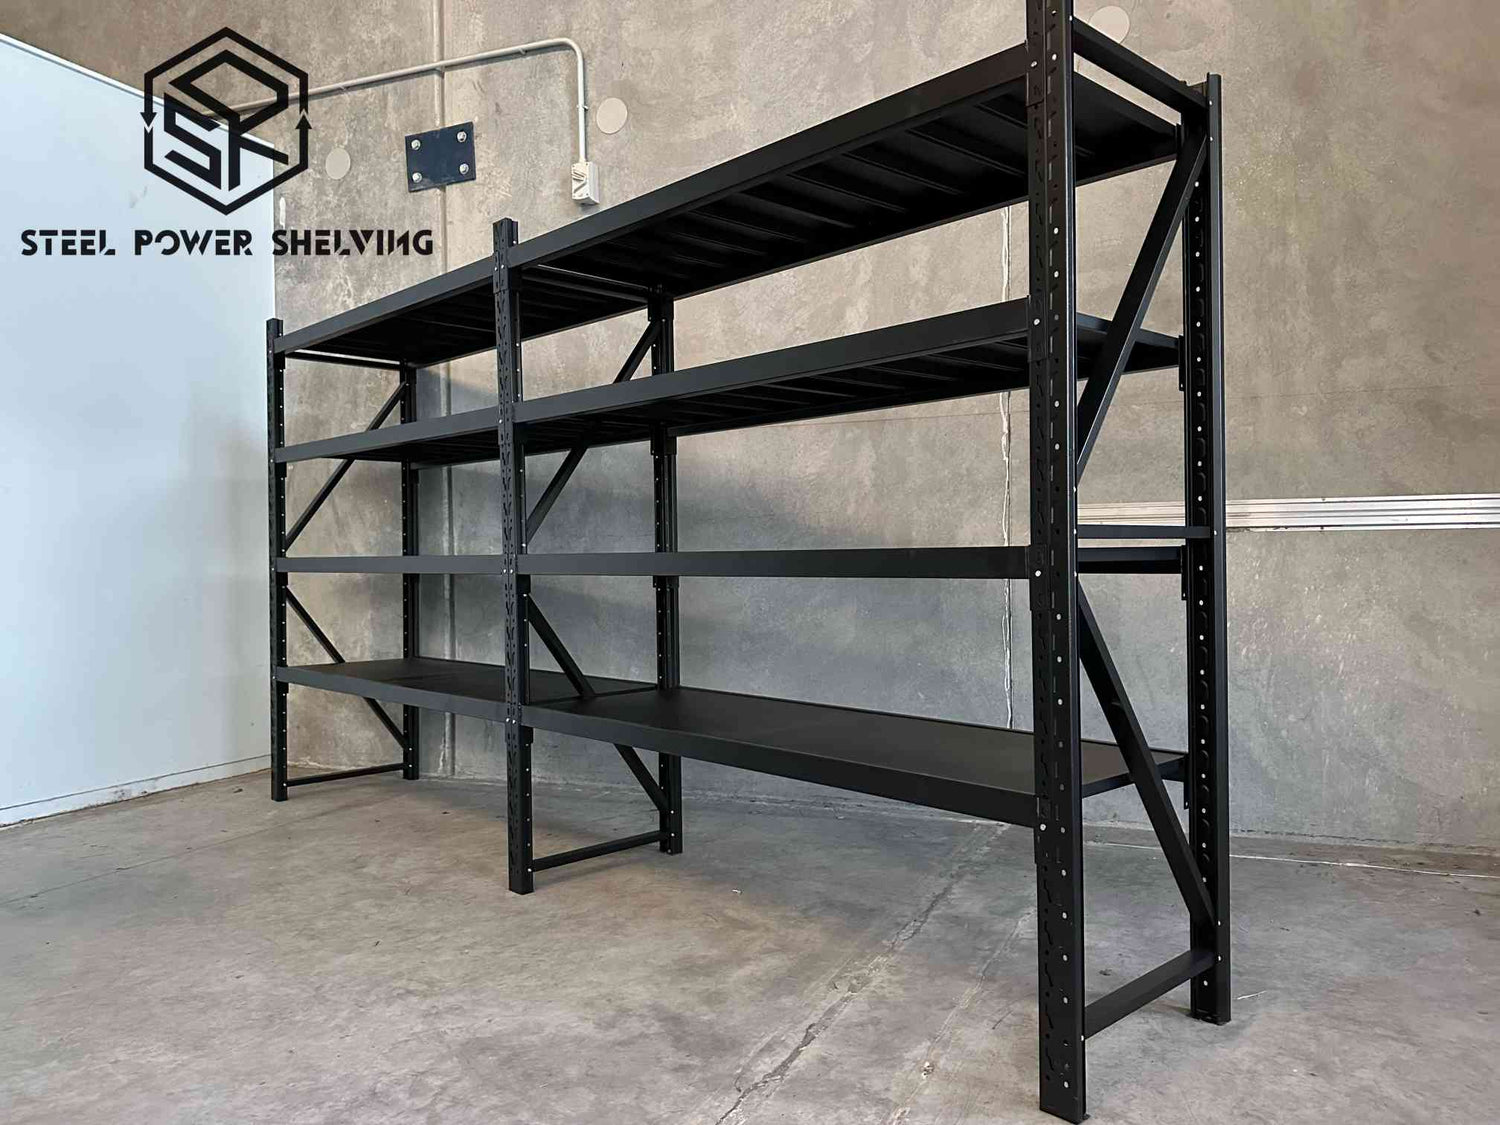 Top 9 heavy duty shelves for storage – Steel Power Shelving